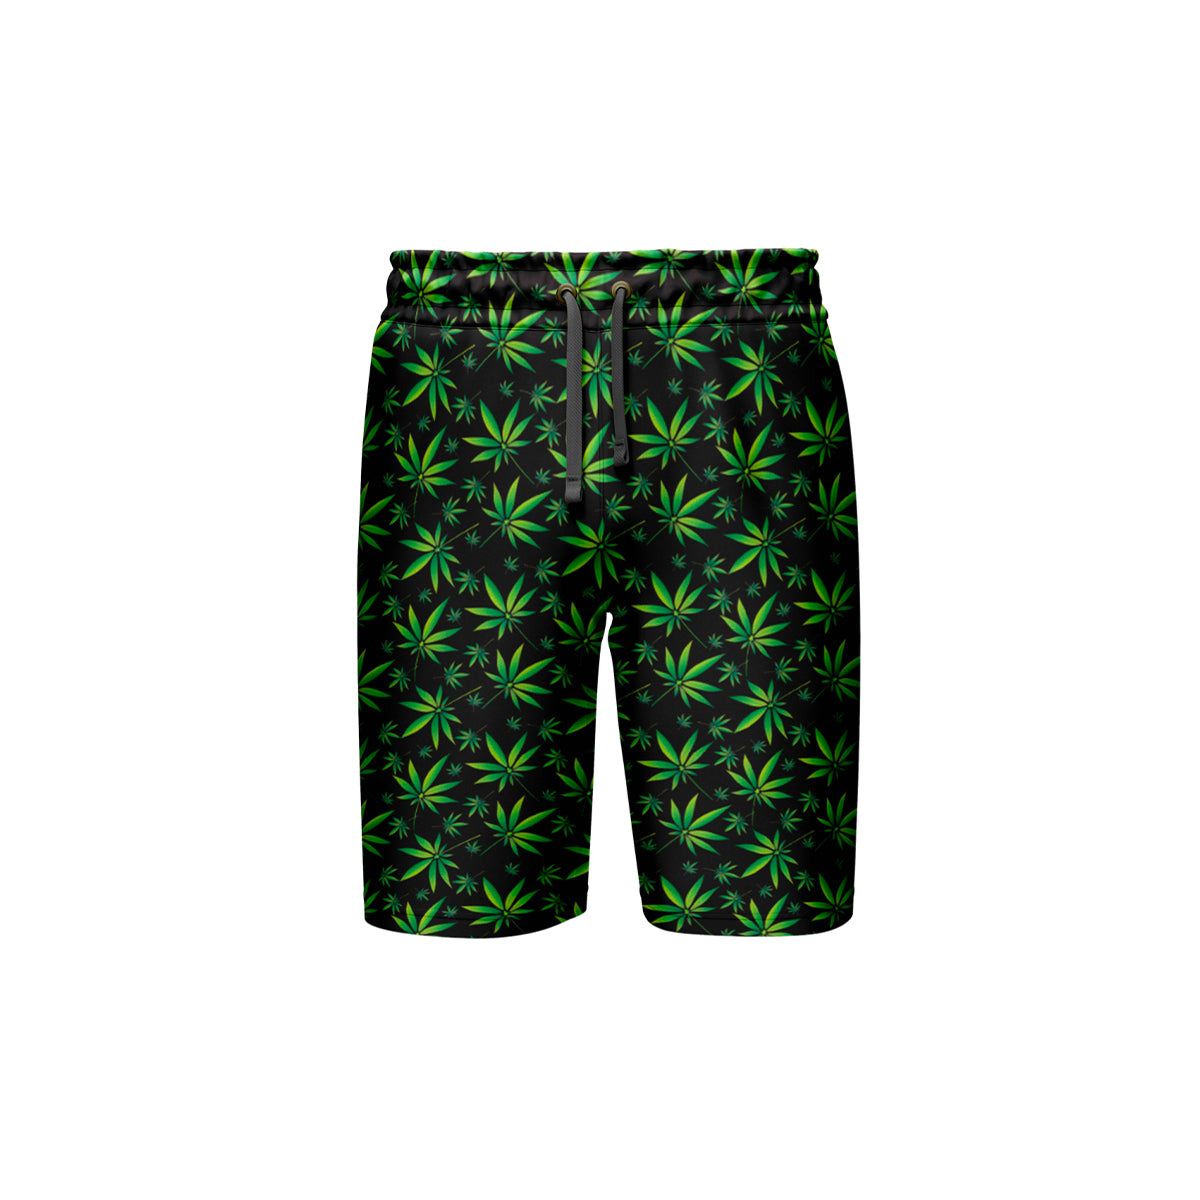 Green Cannabis Leaf Shorts Pack of 5 Units 1-M, 1-L, 1-XL, 1-XXL, 1-XXXL -- 100% Polyester